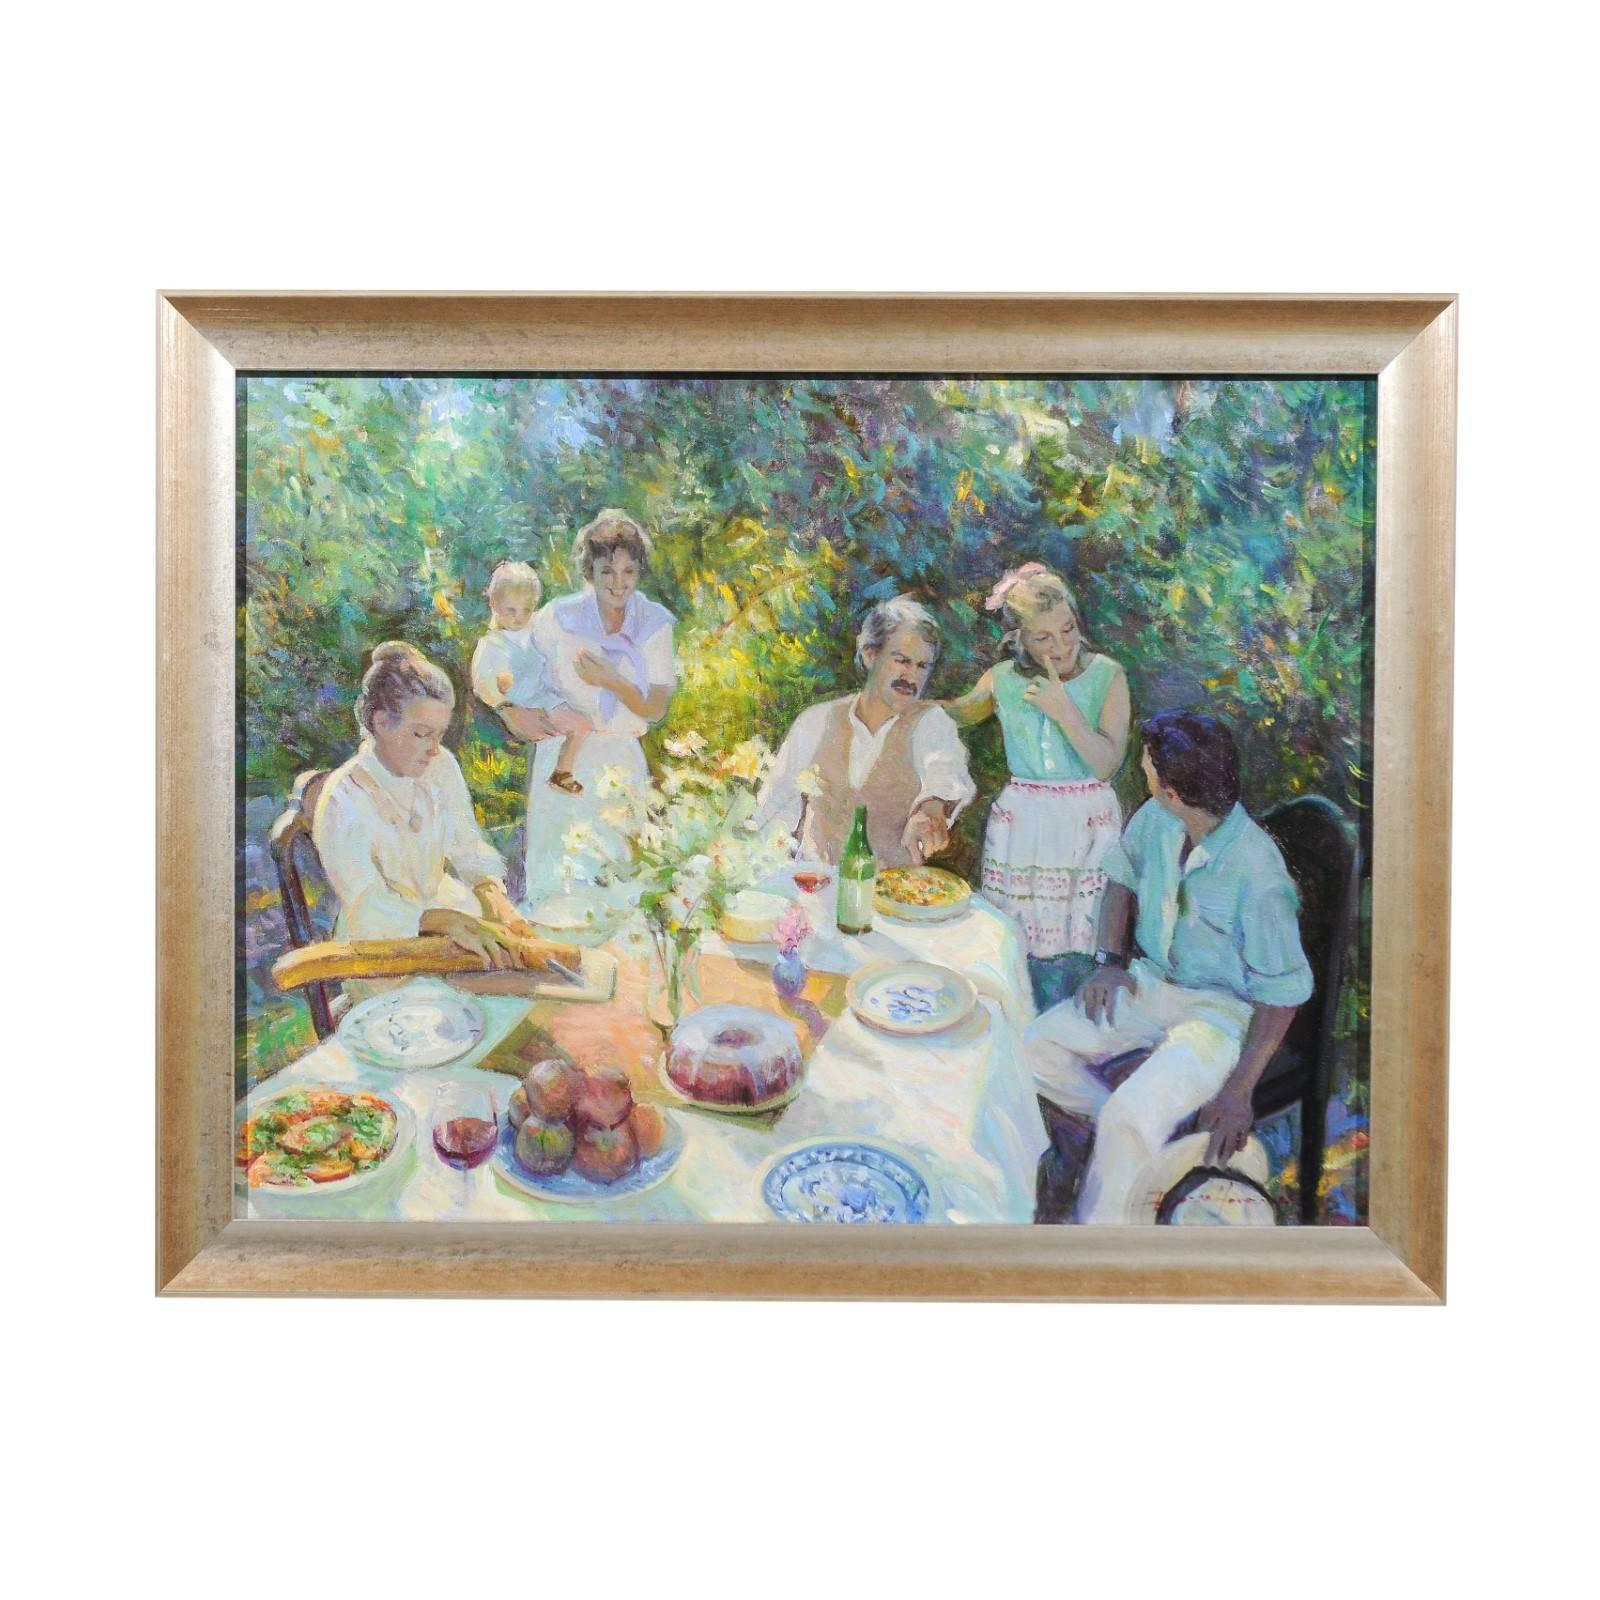 Family Joy, Don Hatfield Contemporary Framed Garden Oil on Linen Painting LiL